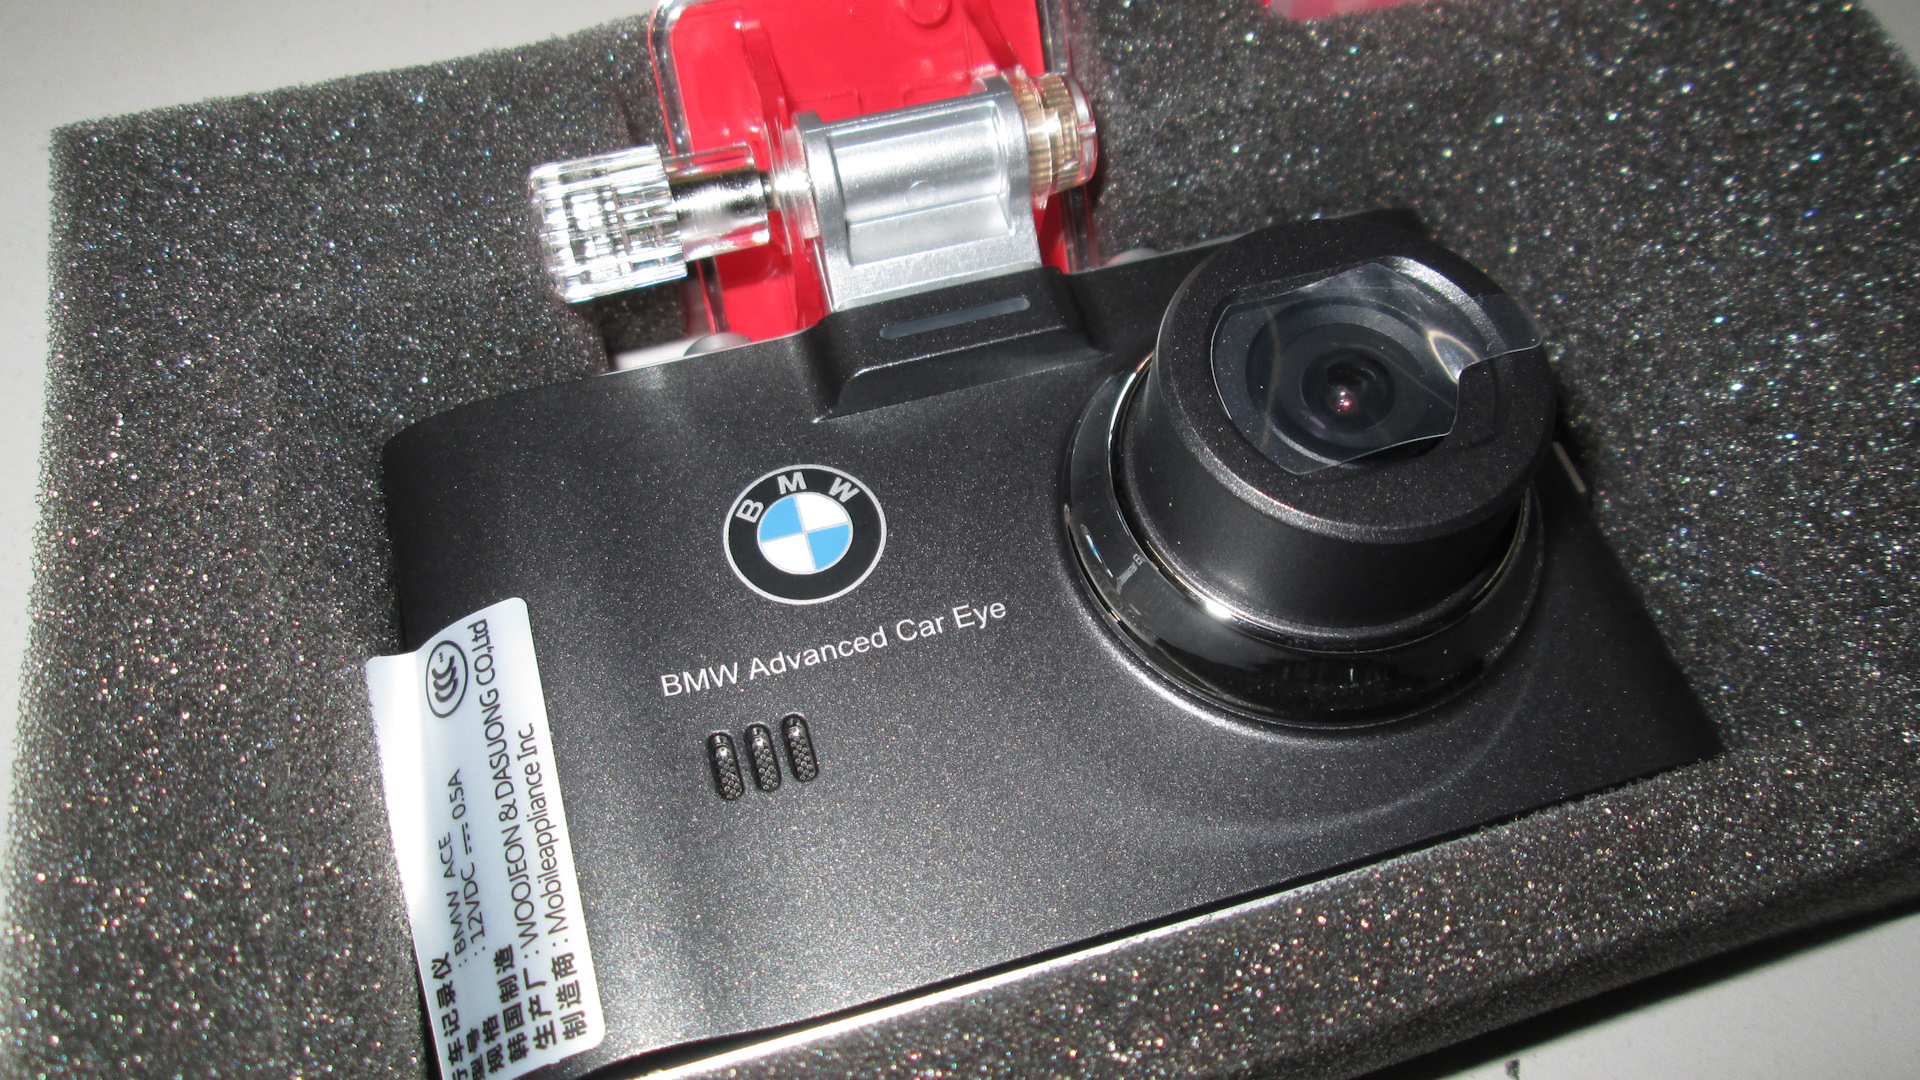 Car eye 3. Регистратор BMW Advanced car Eye 66212364600. Штатный видеорегистратор в БМВ х4. Видеорегистратор BMW Ace. Провода для регистратора BMW Advanced car Eye 2.0.